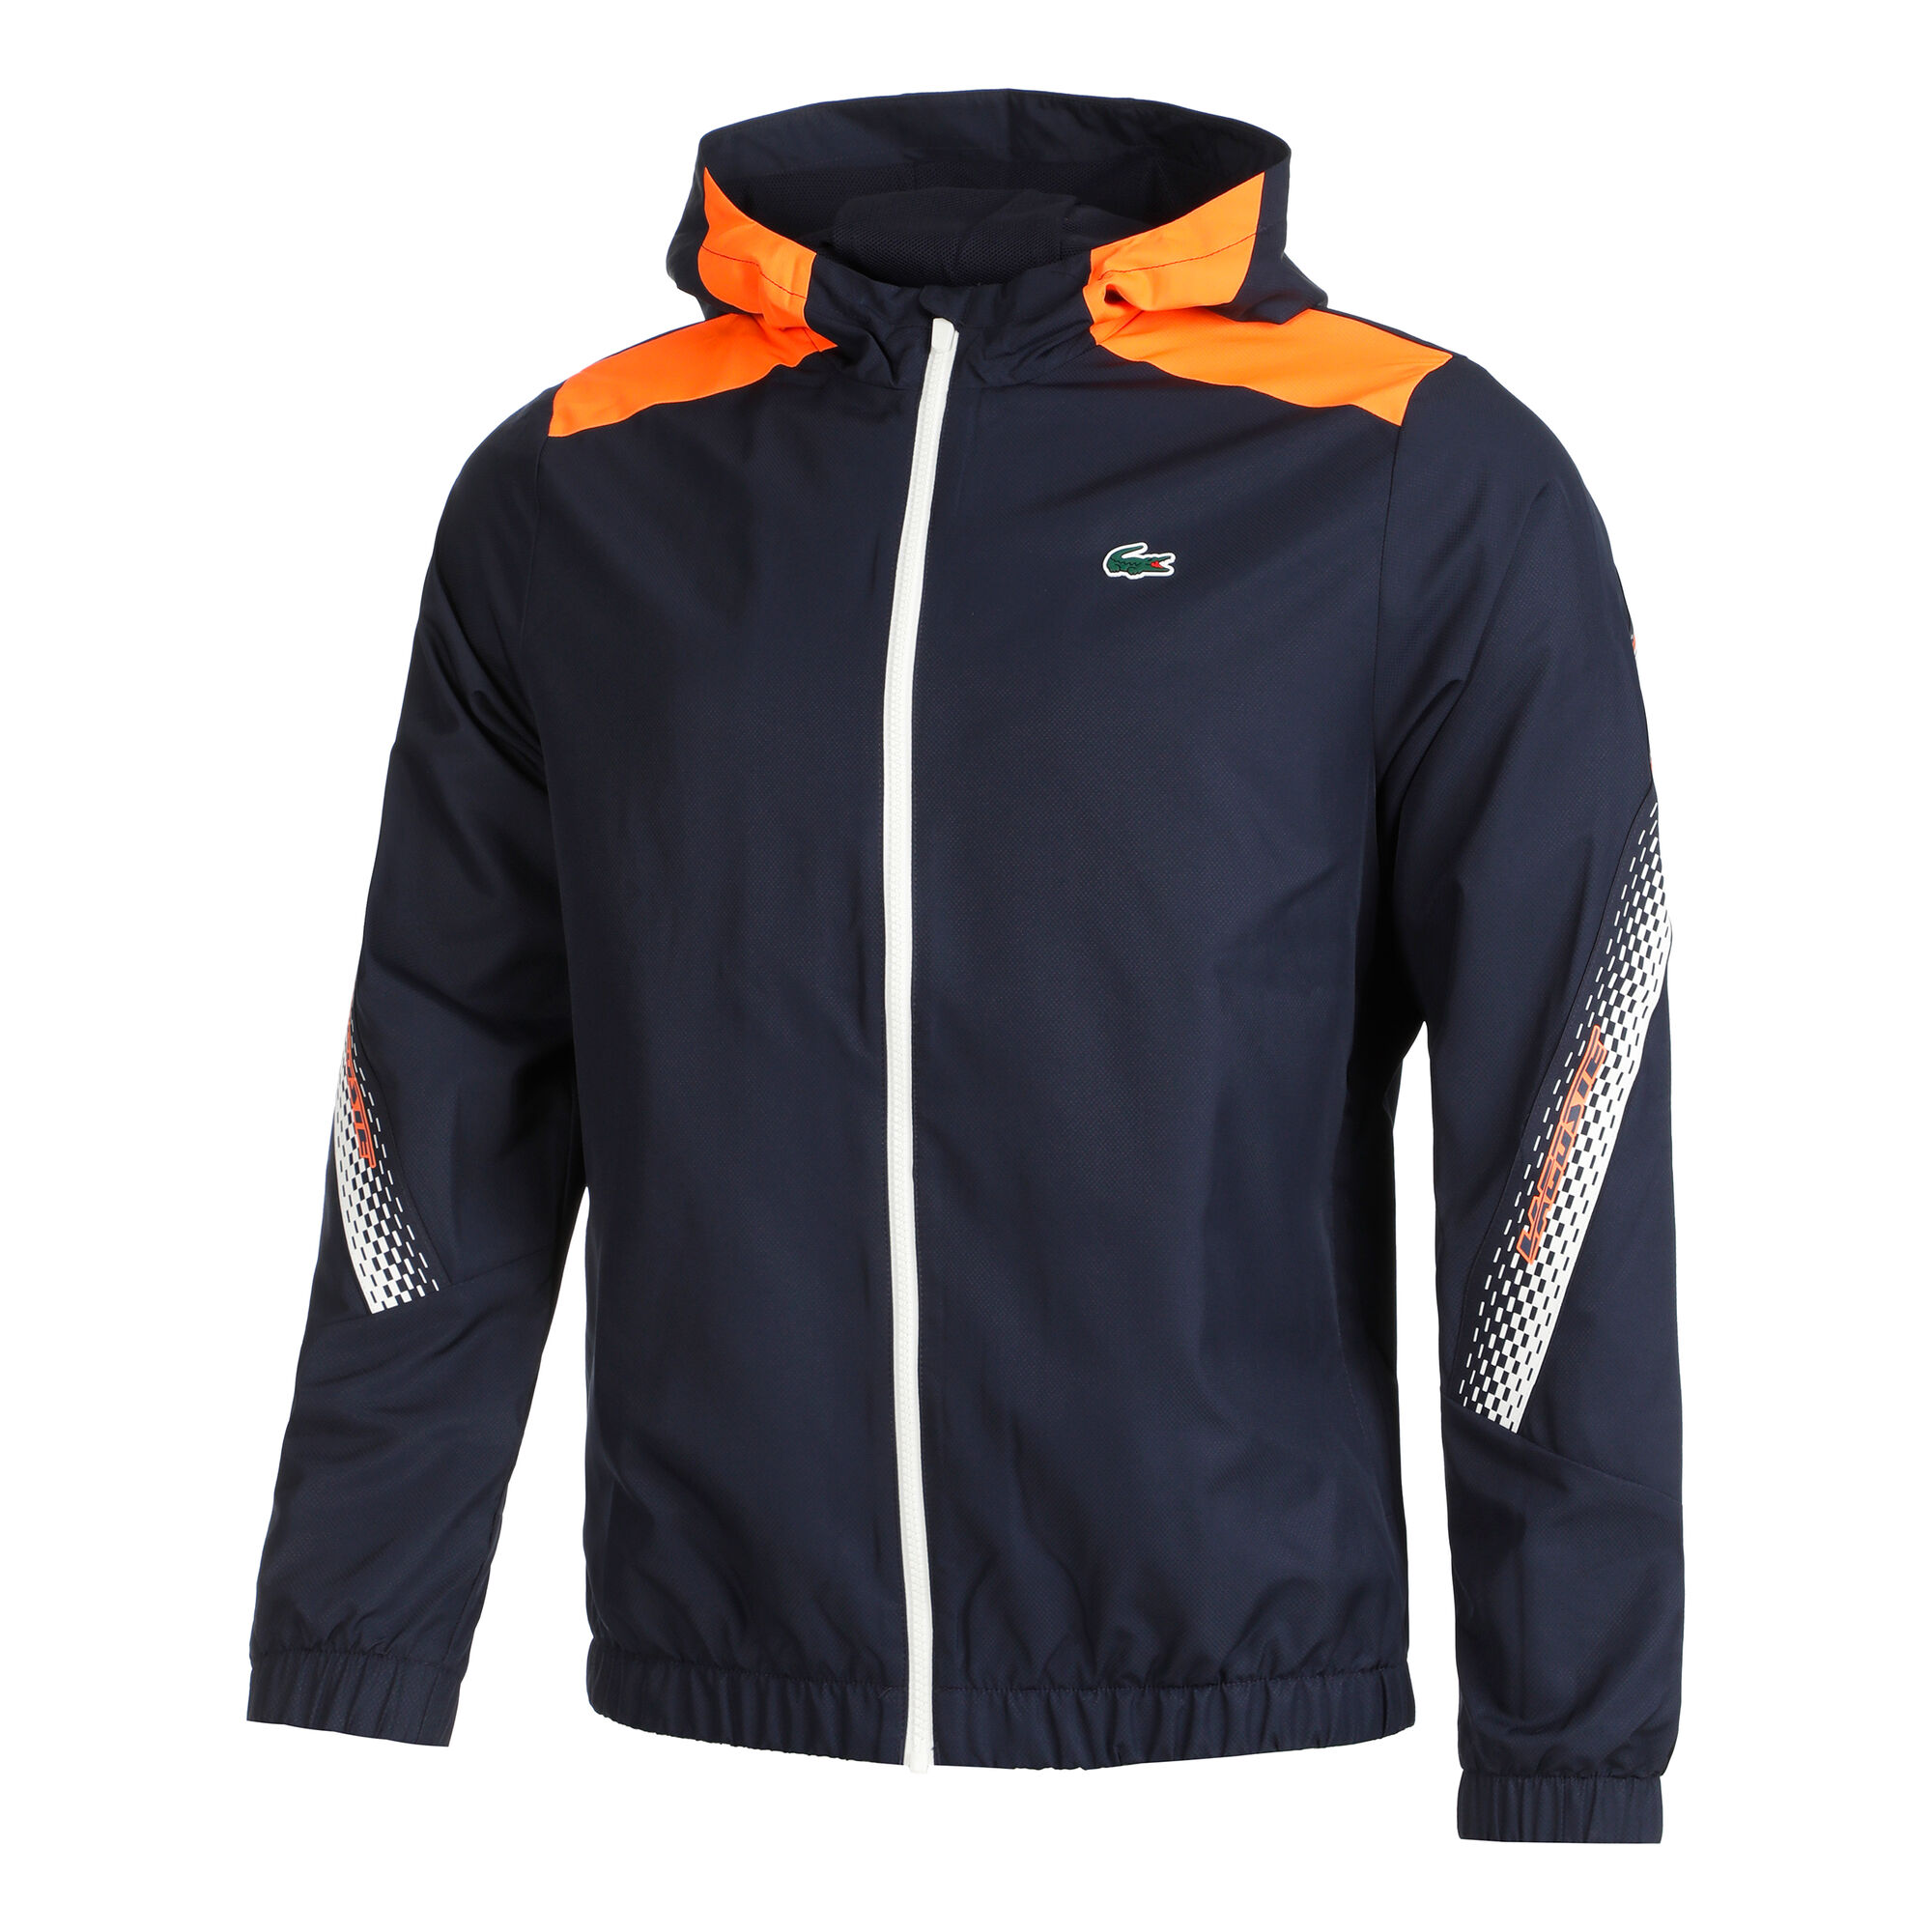 Lacoste Trainingsjacke Herren Blau, Orange online kaufen | Tennis Point DE